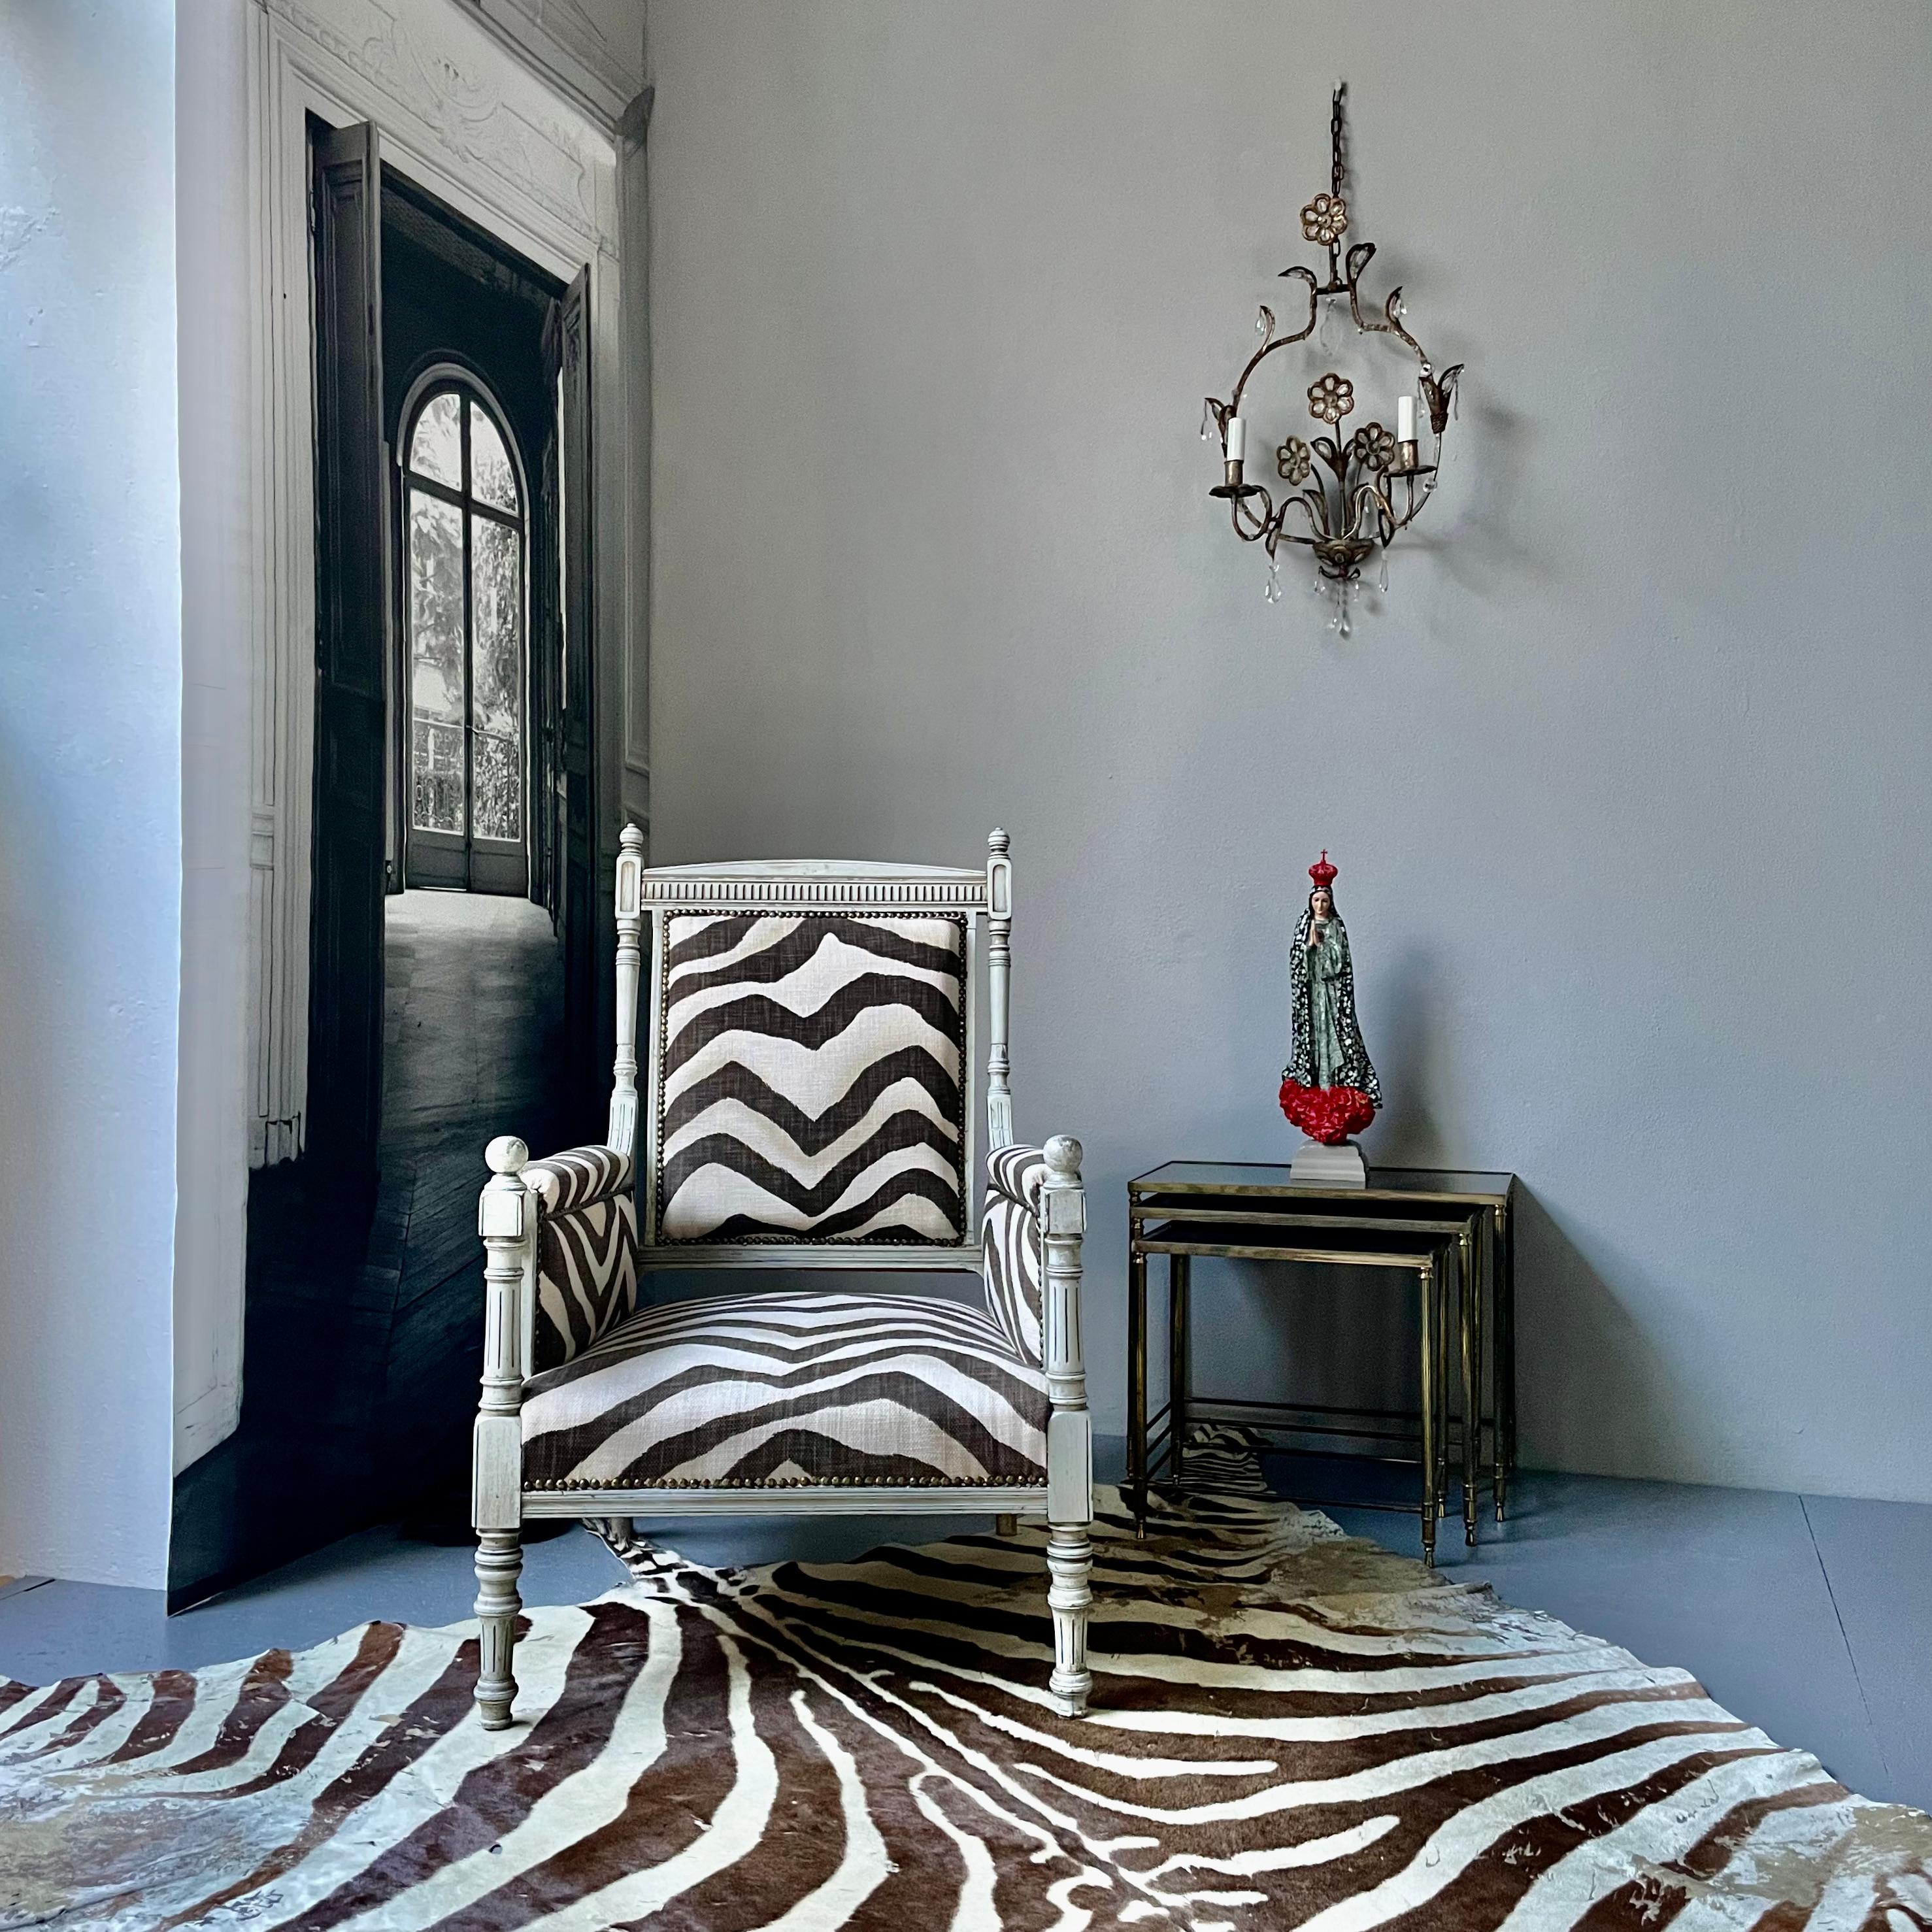 ralph lauren zebra chair